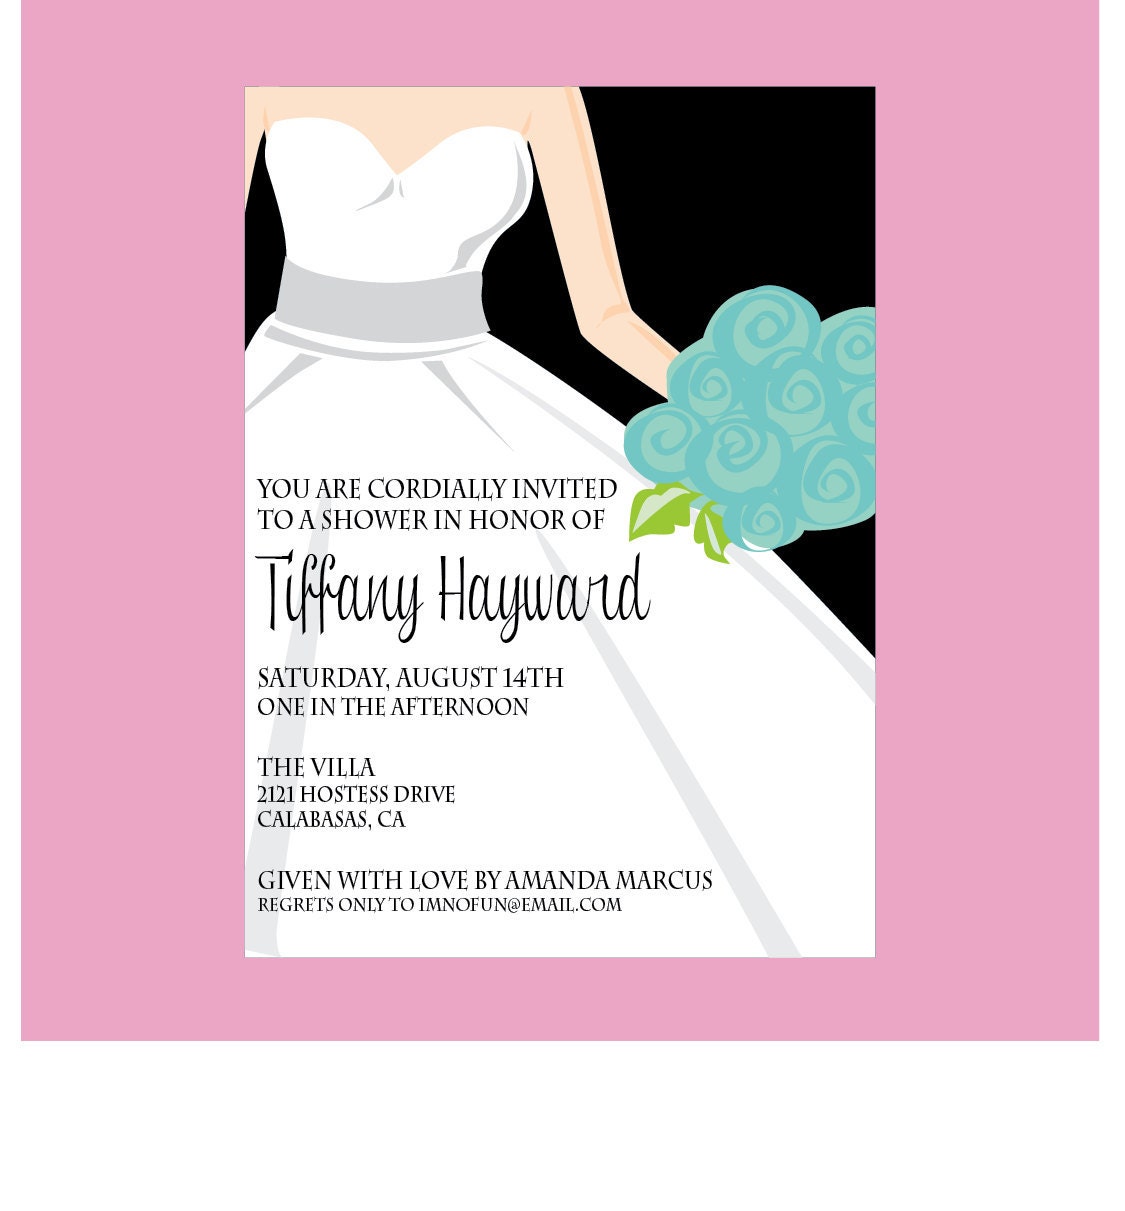 Bride in Tiffany Co Wedding Dress Shower Invitation 199 USD